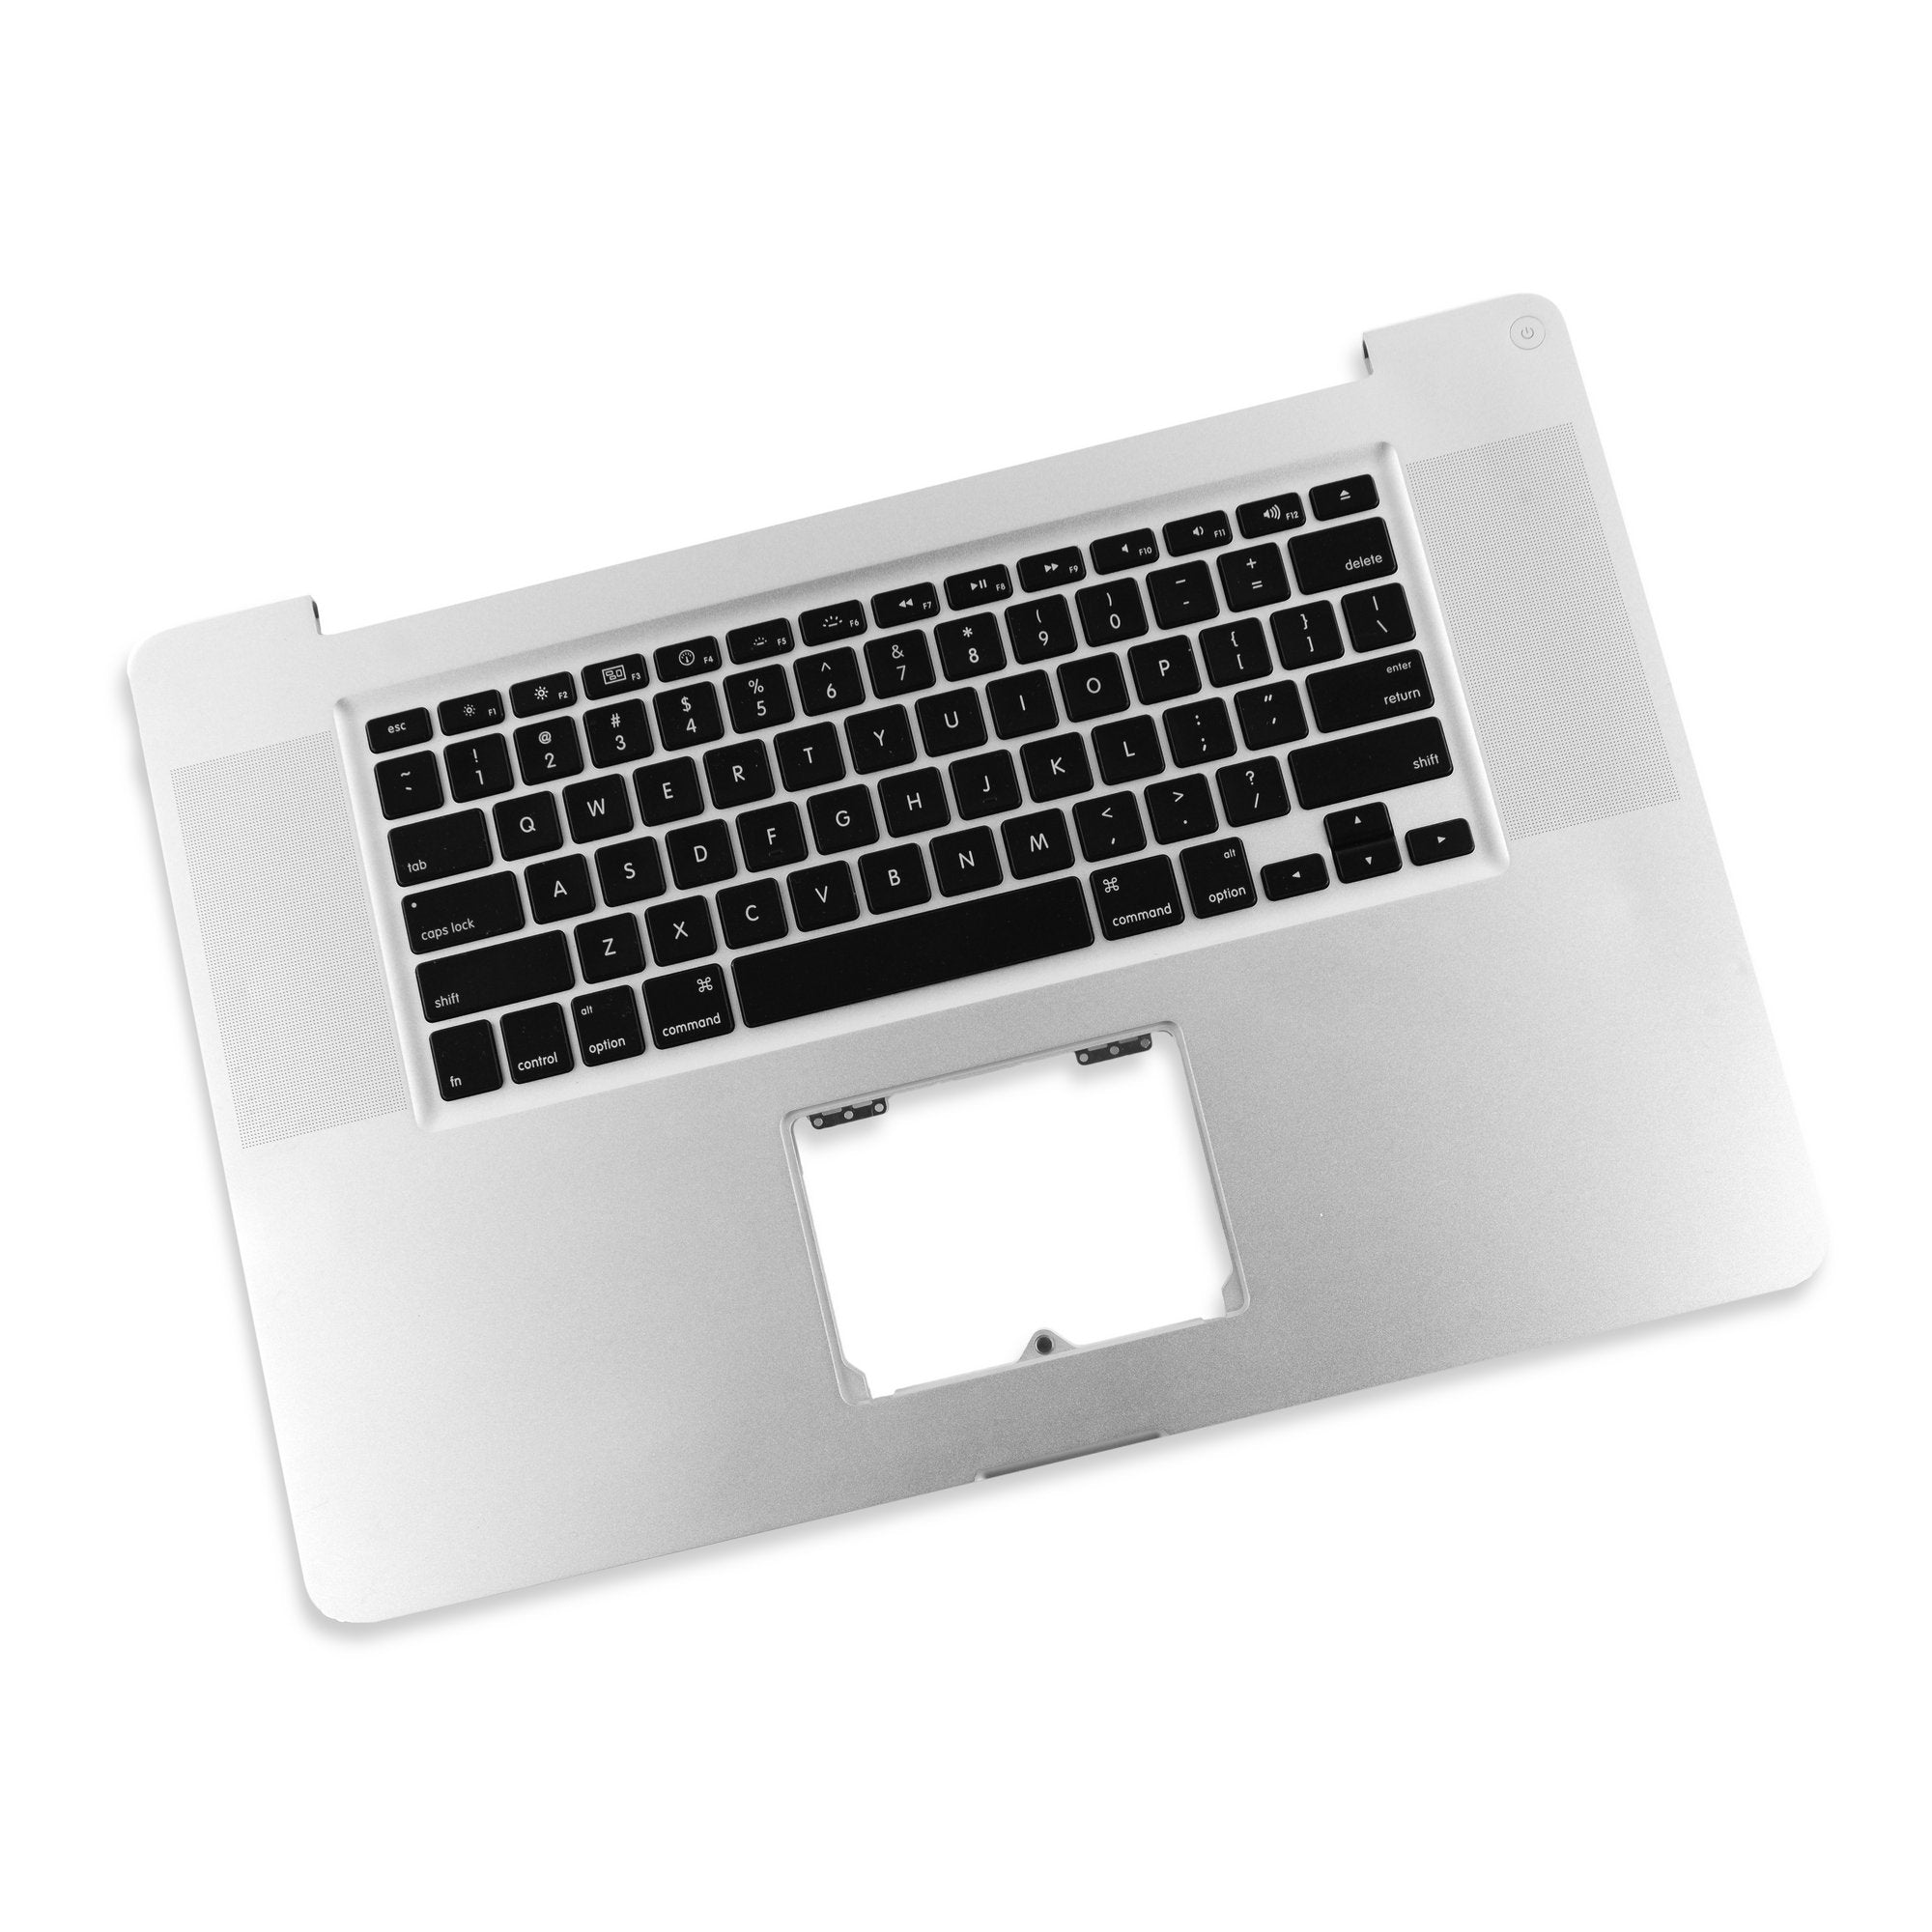 MacBook Pro 17" Unibody (Early 2011) Upper Case